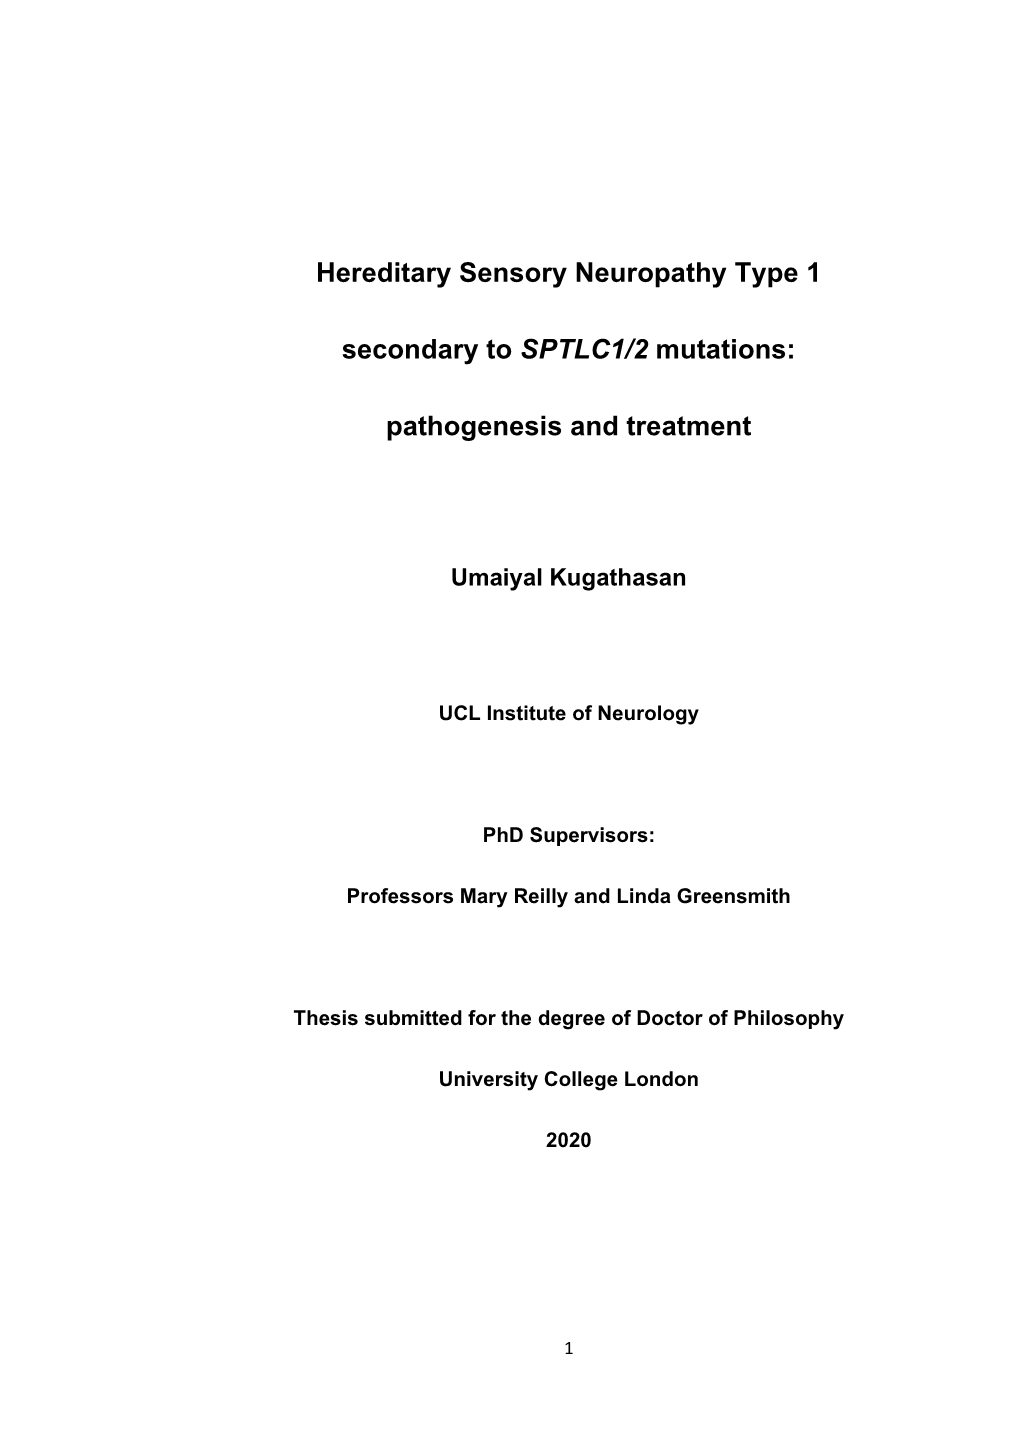 Hereditary Sensory Neuropathy Type 1 Secondary to SPTLC1/2 Mutations